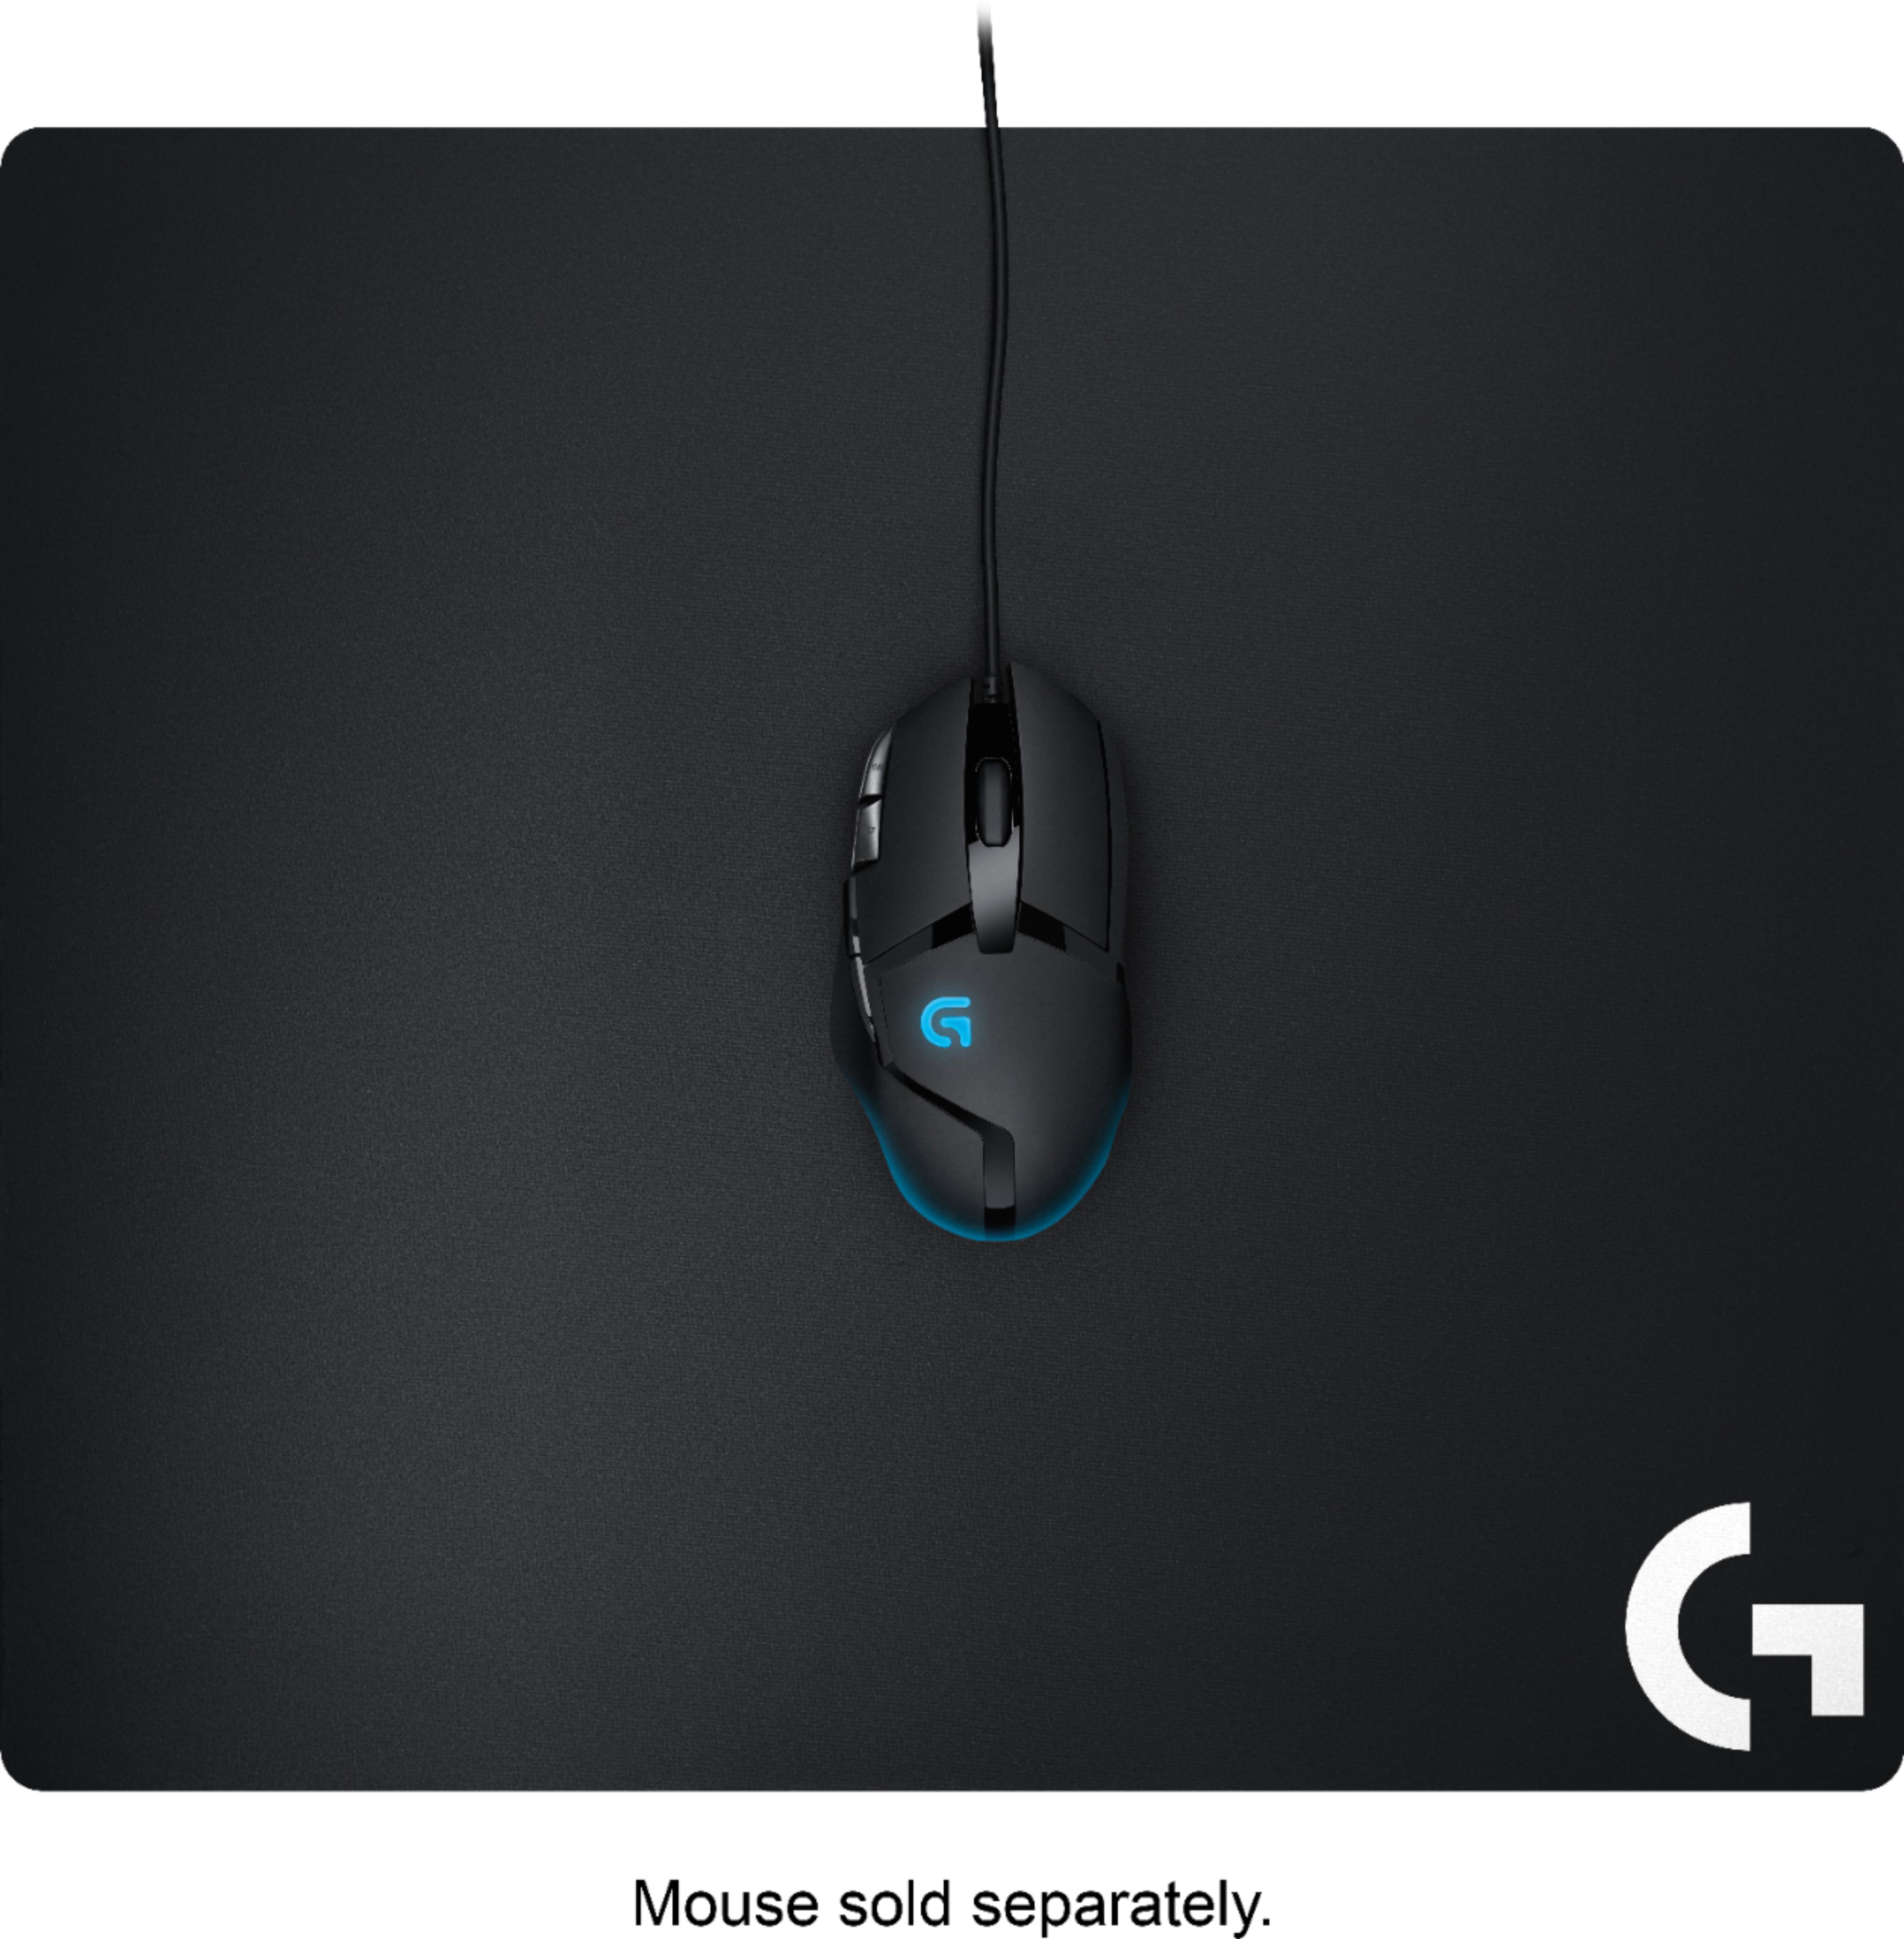 Logitech G640 Gaming Mouse Pad Black 943 0000 Best Buy